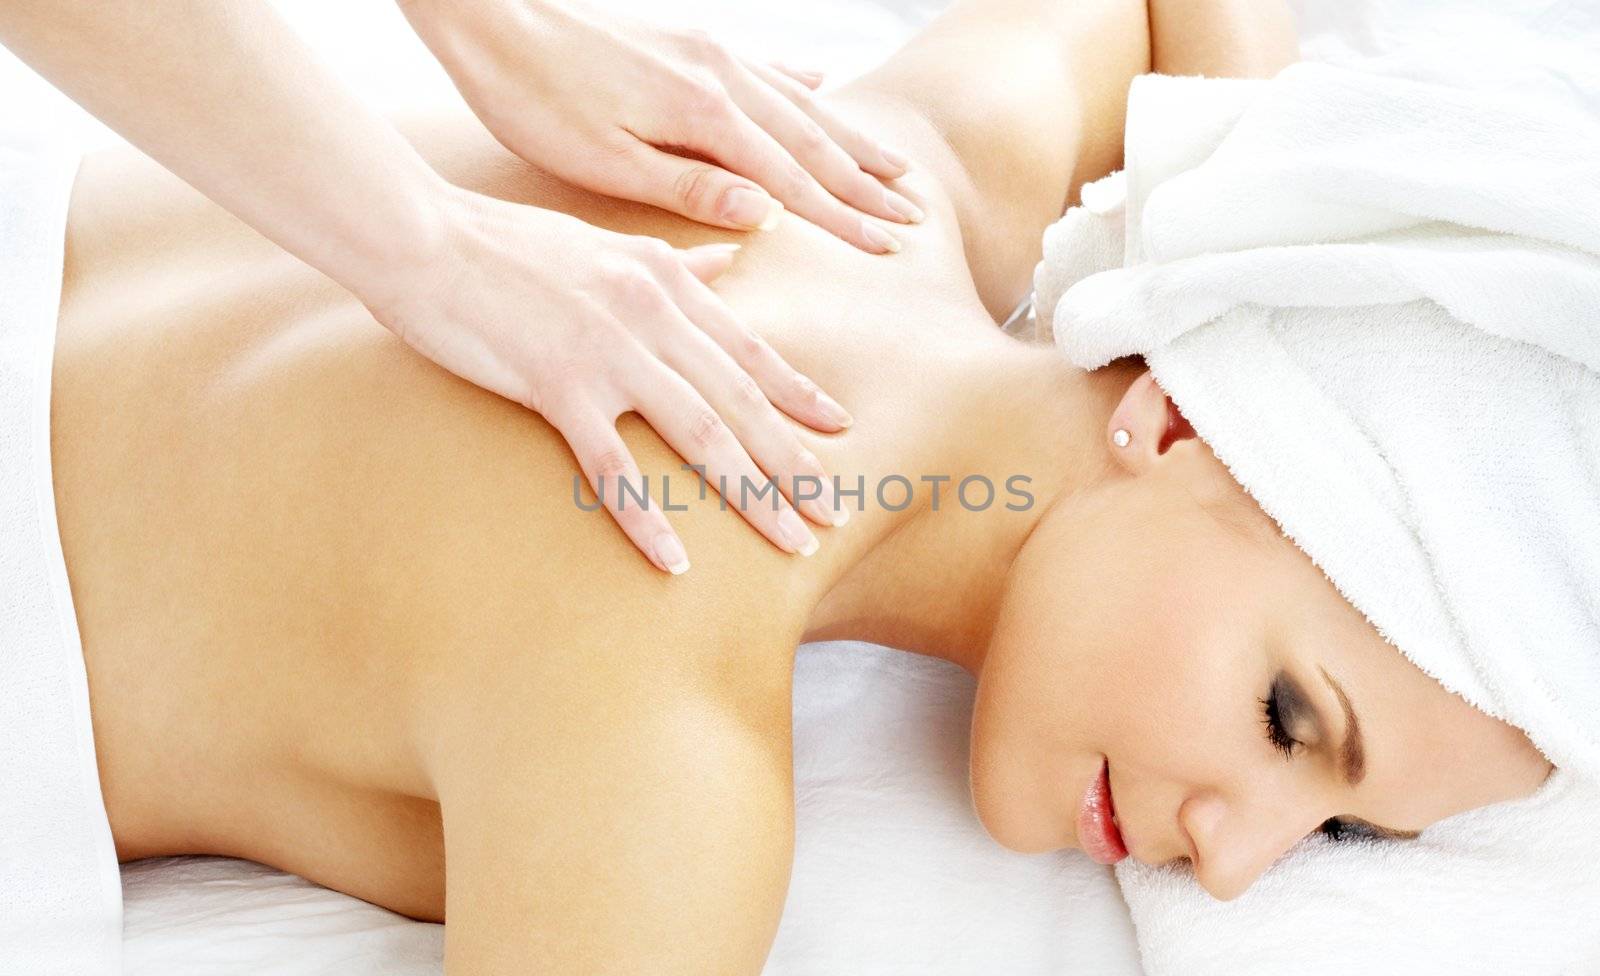 professional massage #2 by dolgachov